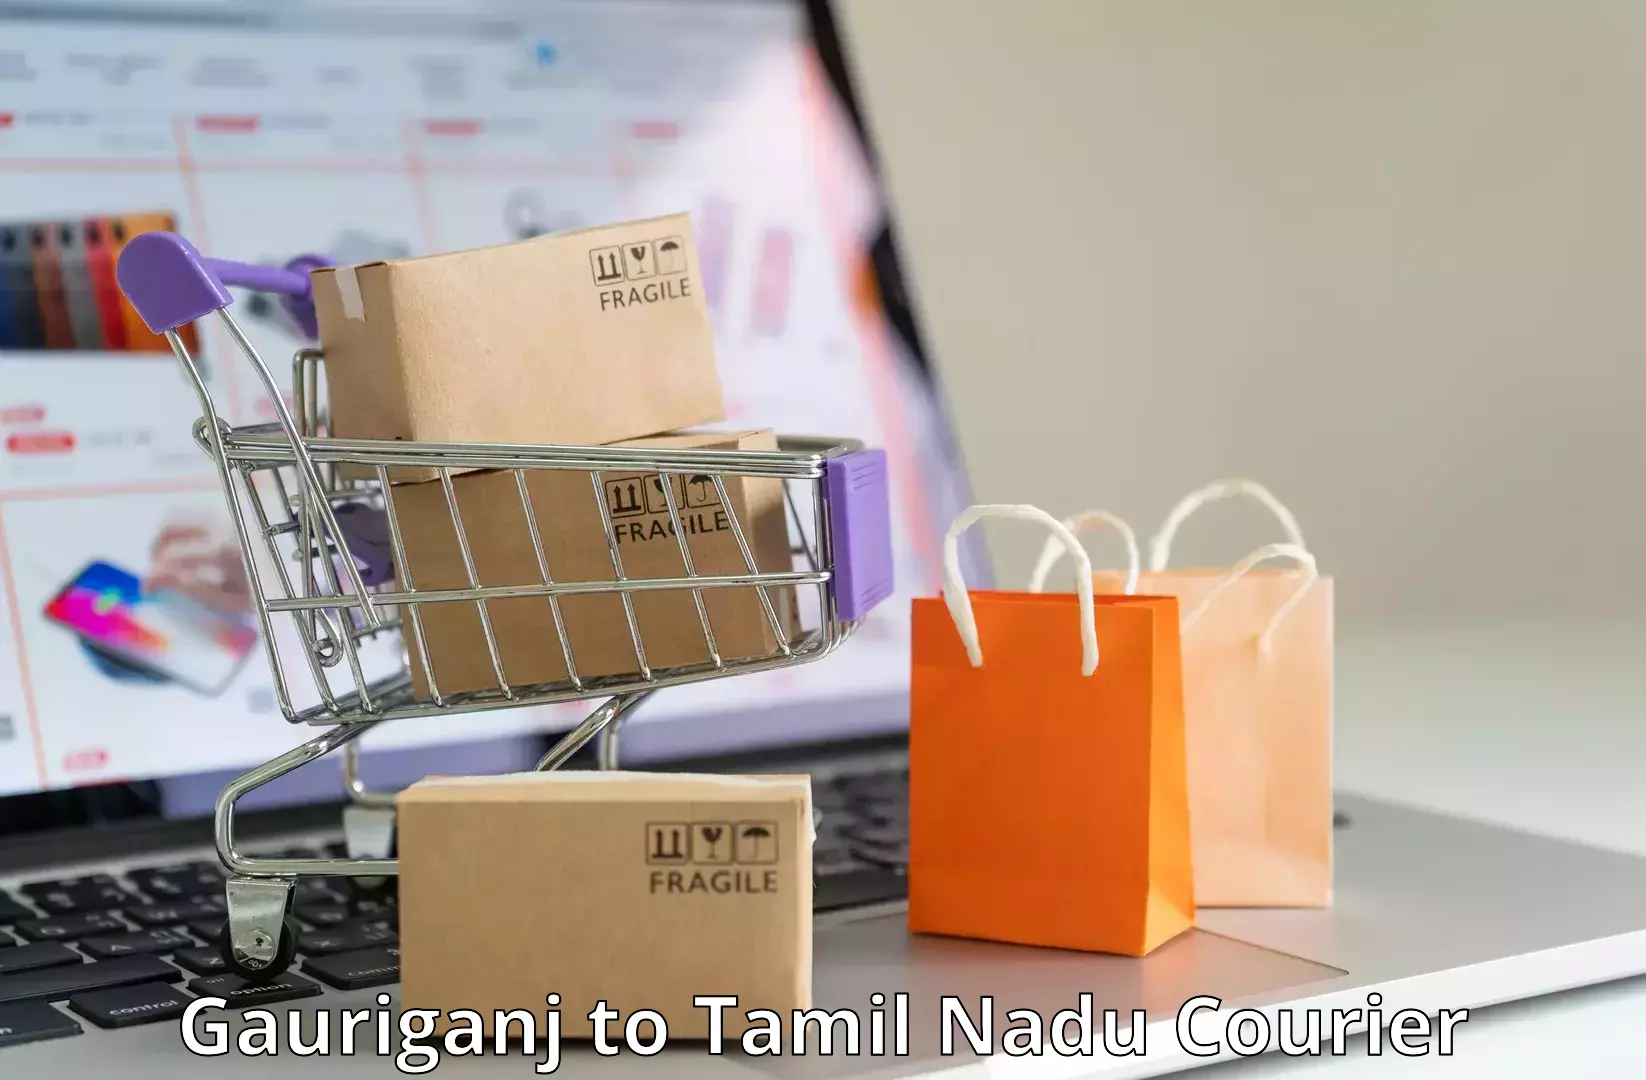 Logistics efficiency Gauriganj to Tamil Nadu